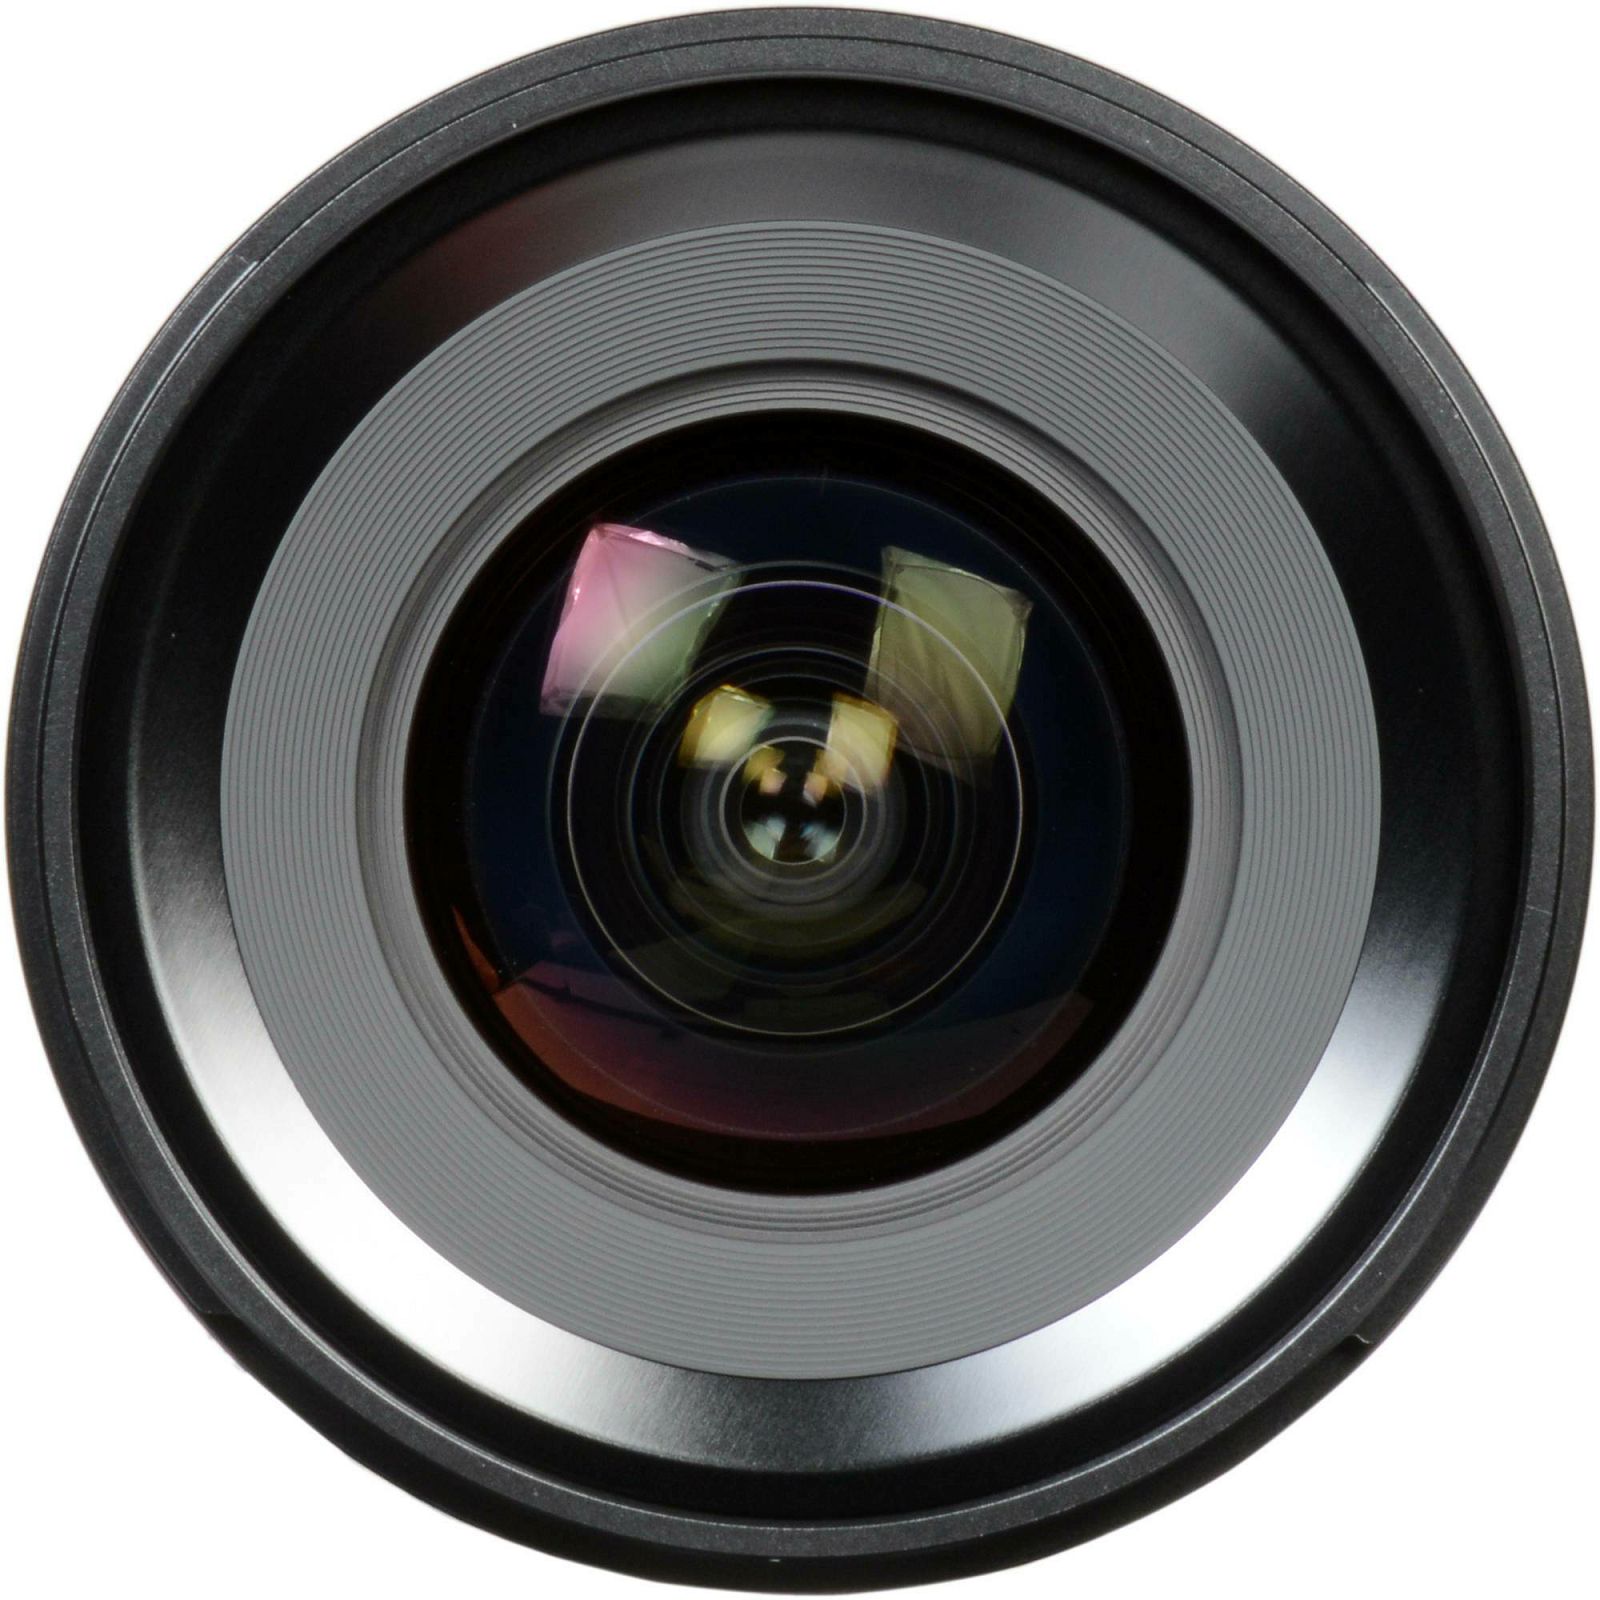 Fujifilm GF 23mm f/4 R LM WR (18mm in 35mm format) Fuji Fujinon širokokutni objektiv